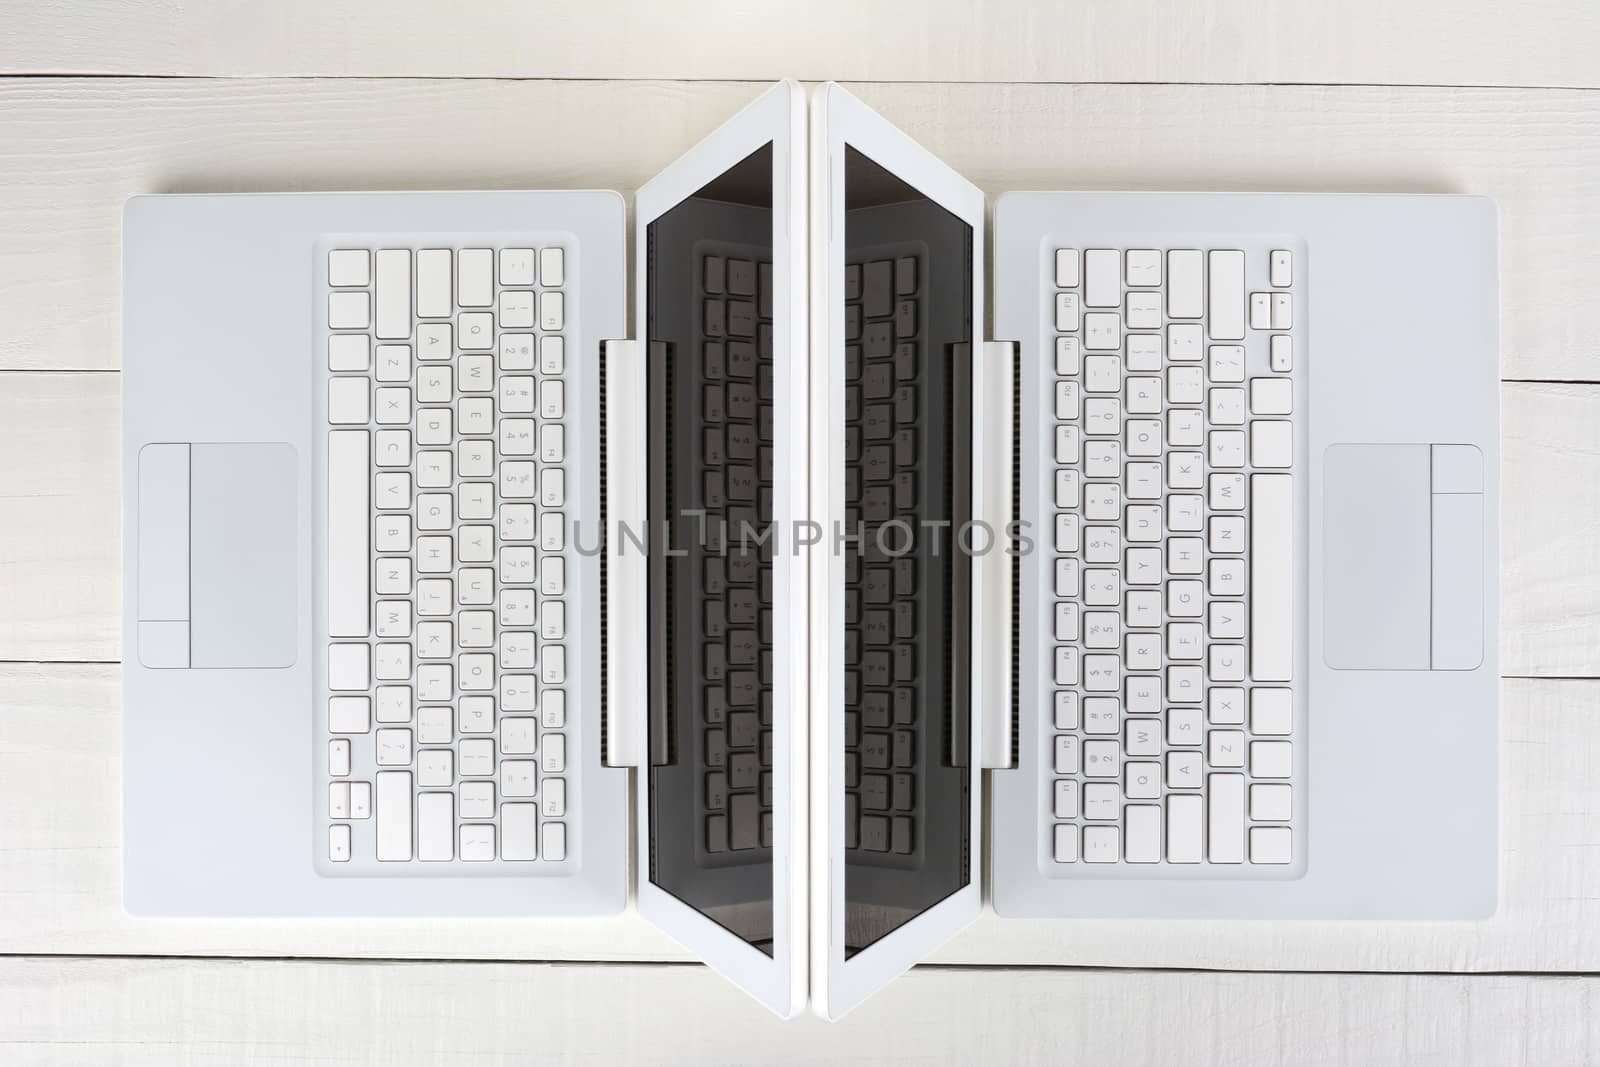 White Laptops Back-to-Back by sCukrov